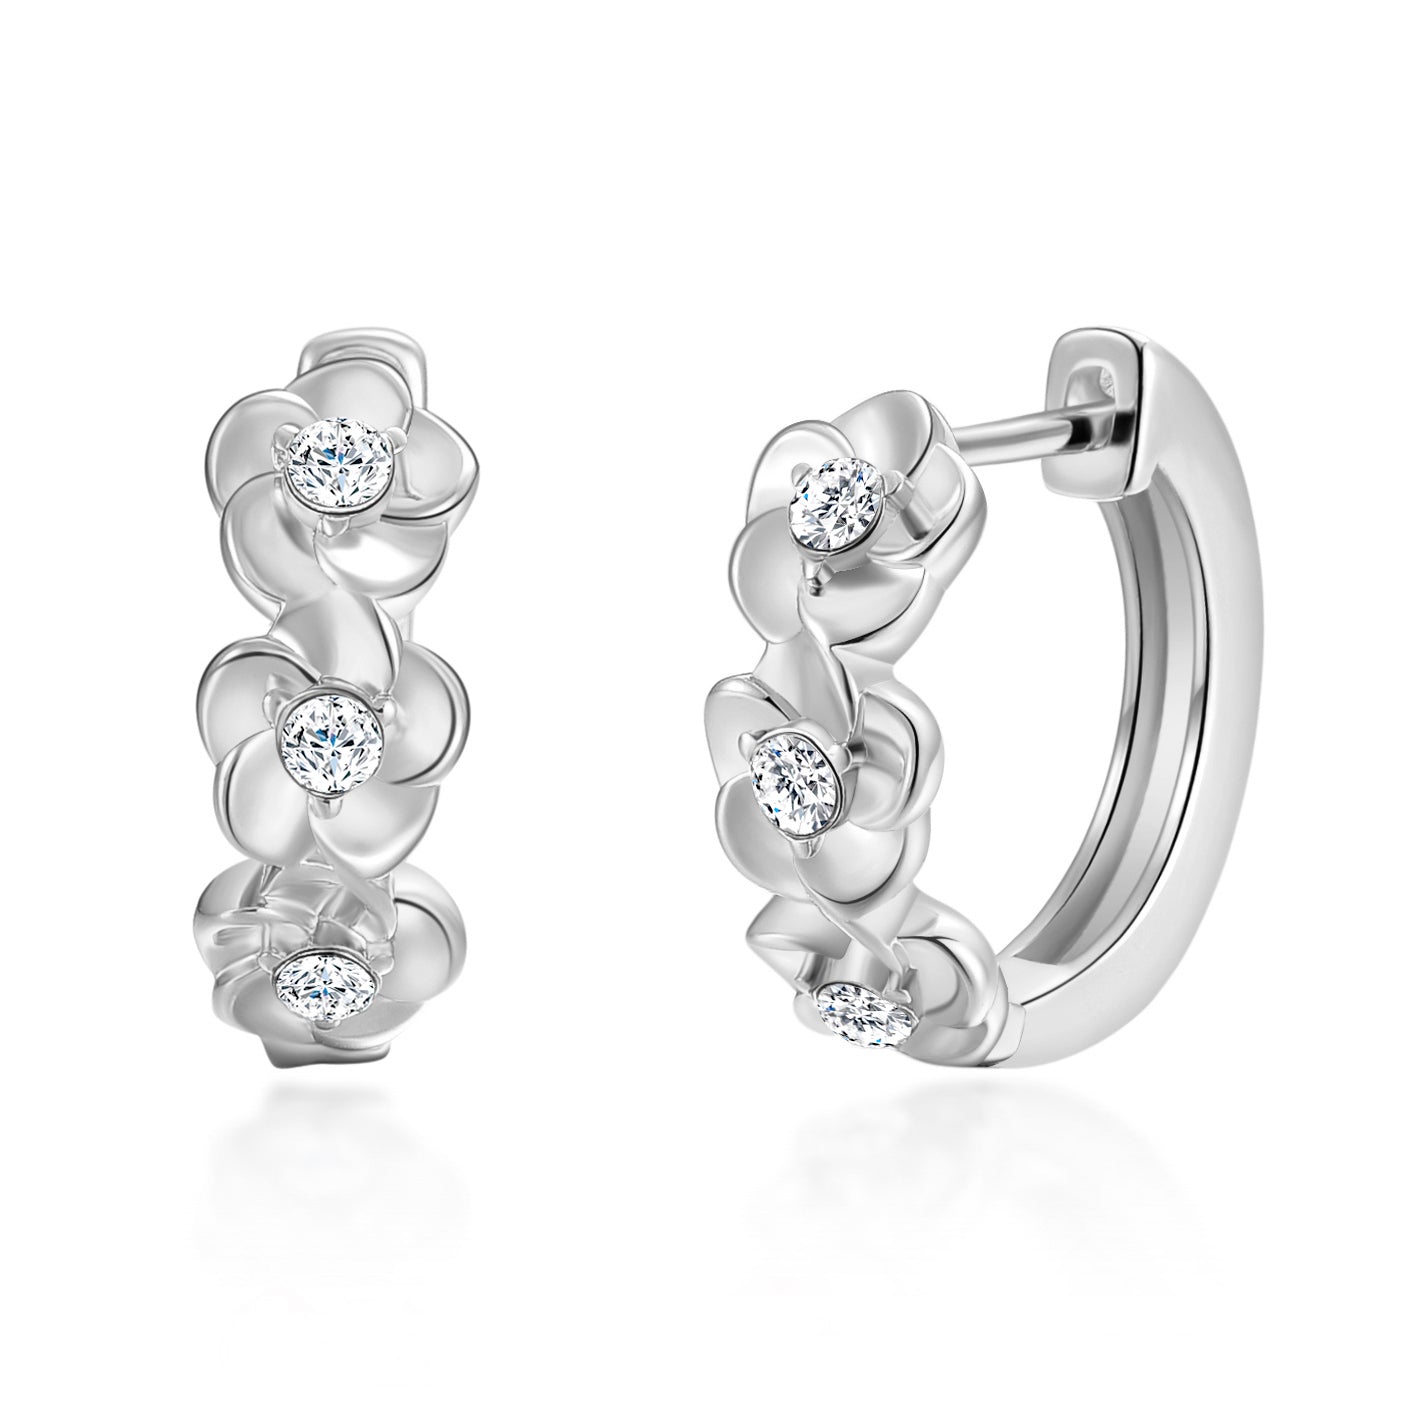 Silver Plated Flower Hoop Earrings Created with Zircondia® Crystals by Philip Jones Jewellery